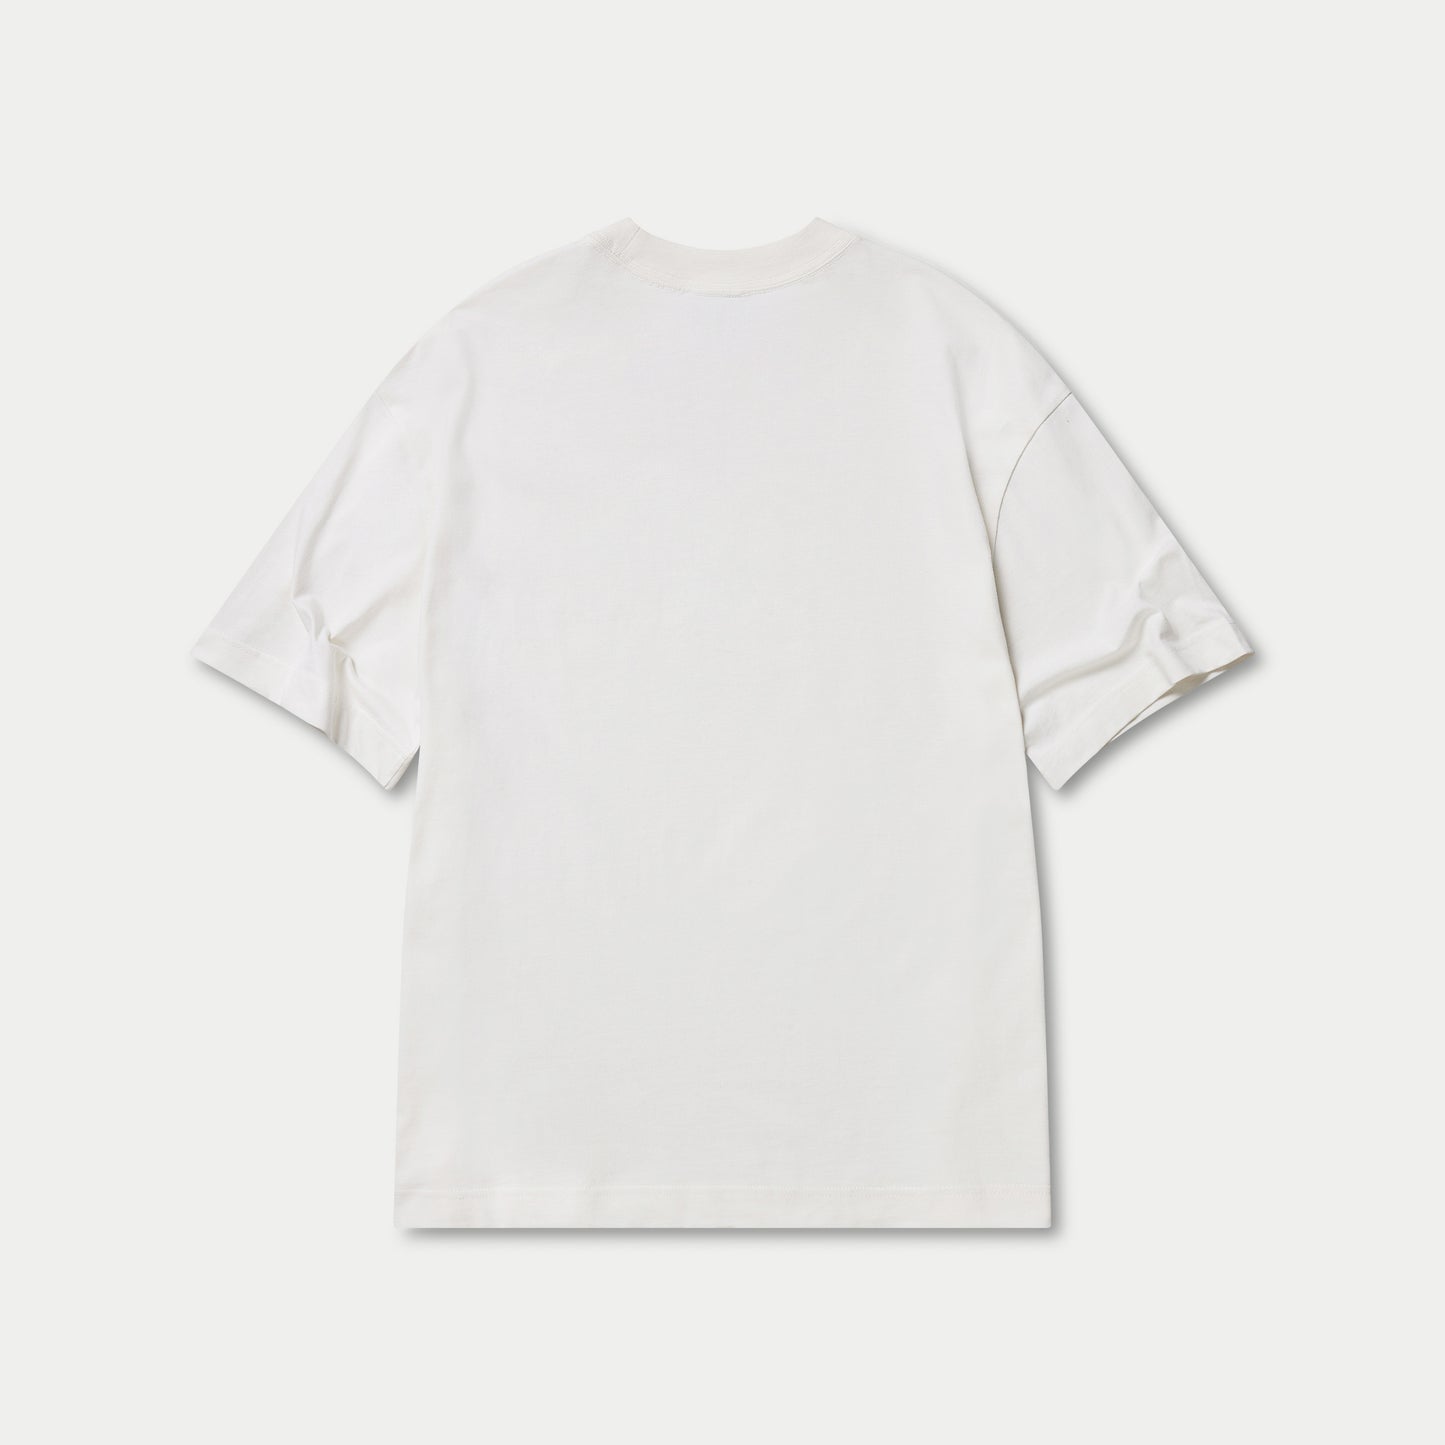 Blanks T-Shirt Pack of 3 - Off White